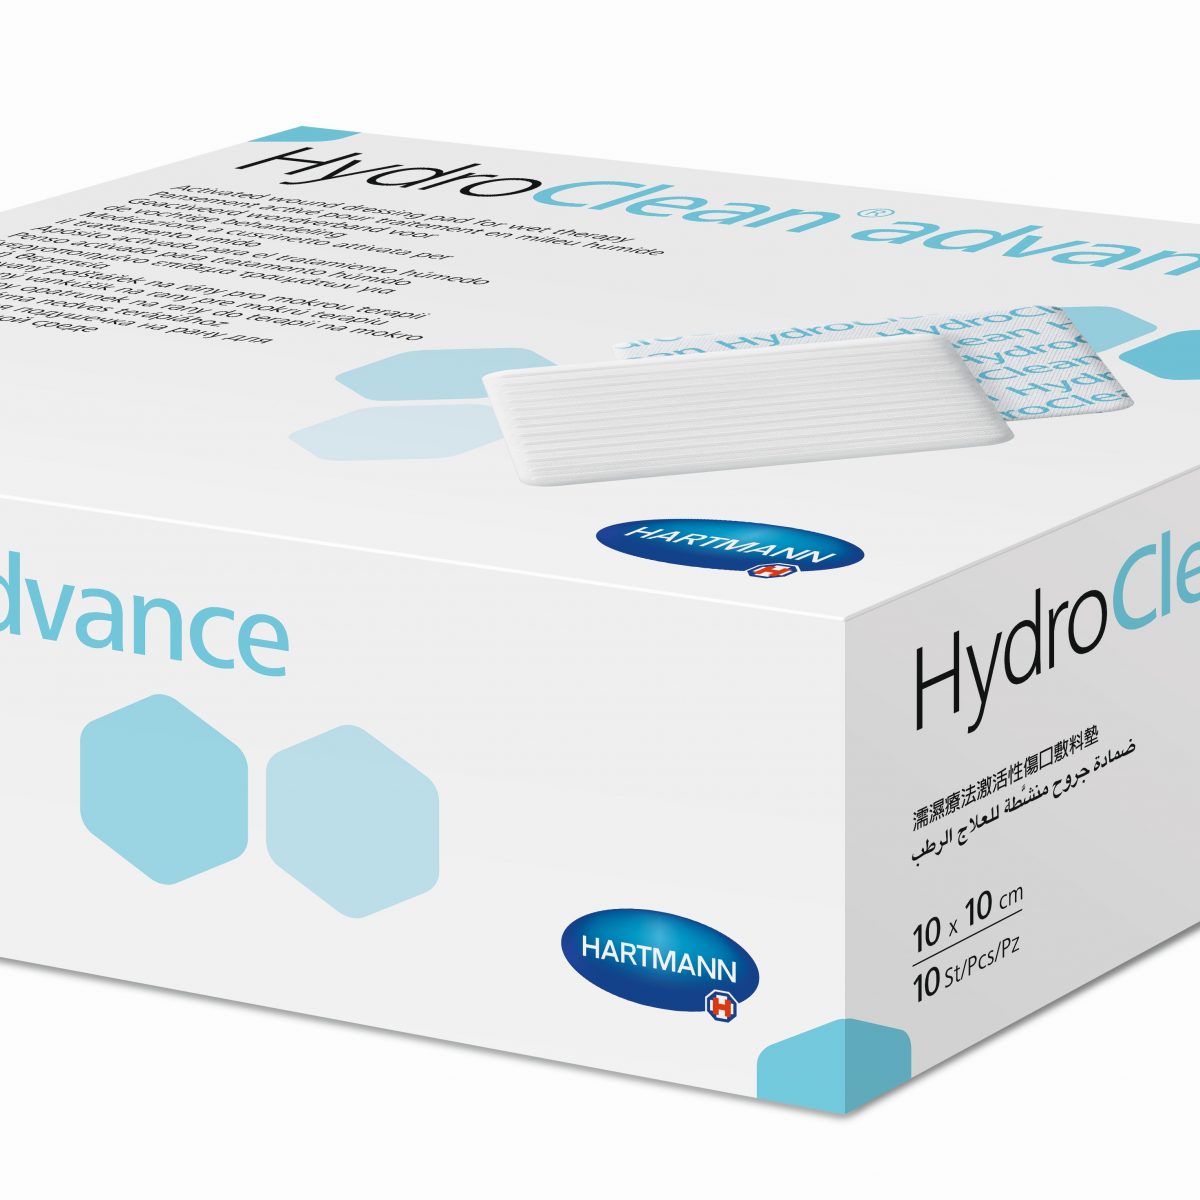 Pansament hidro-reactiv, cu PSA*, pentru 3 zile Hartmann HydroClean Advance, 10 x 10 cm, 10 buc